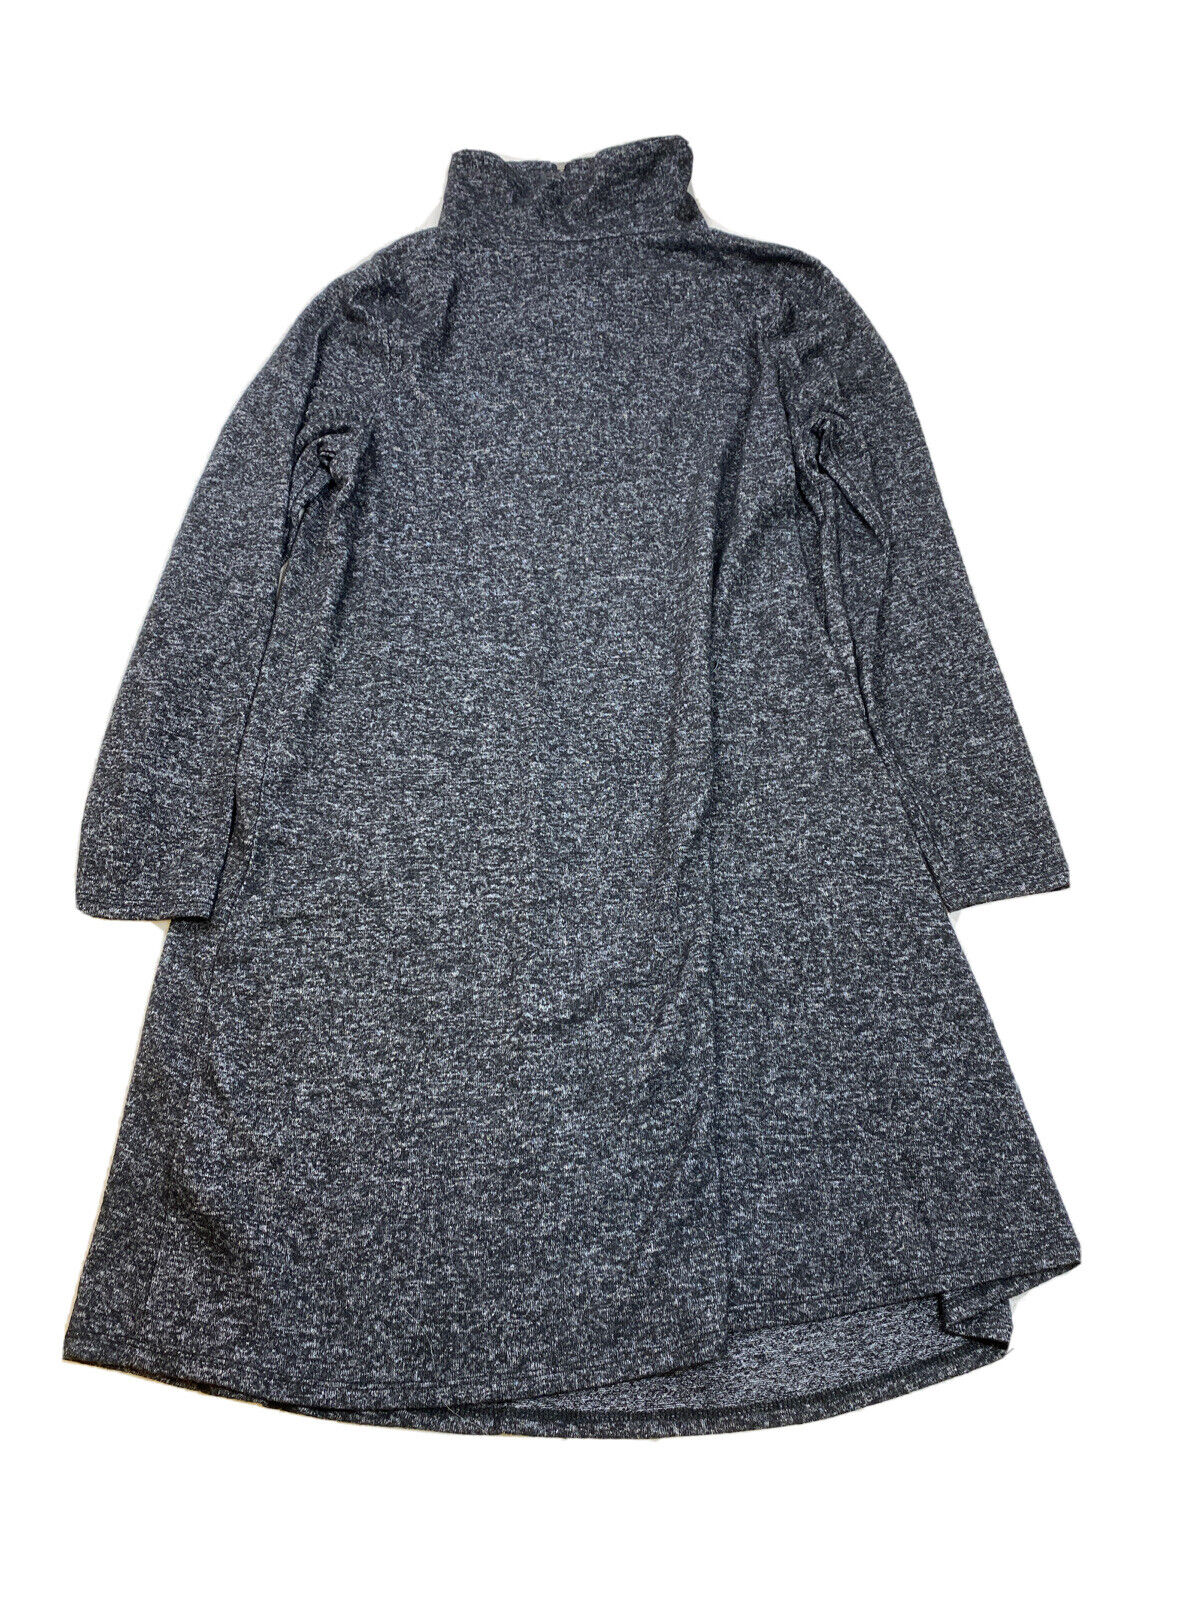 NEW Ab Studio Womens Black Long Sleeve 1/4 Zip Pullover Sweater Dress - M